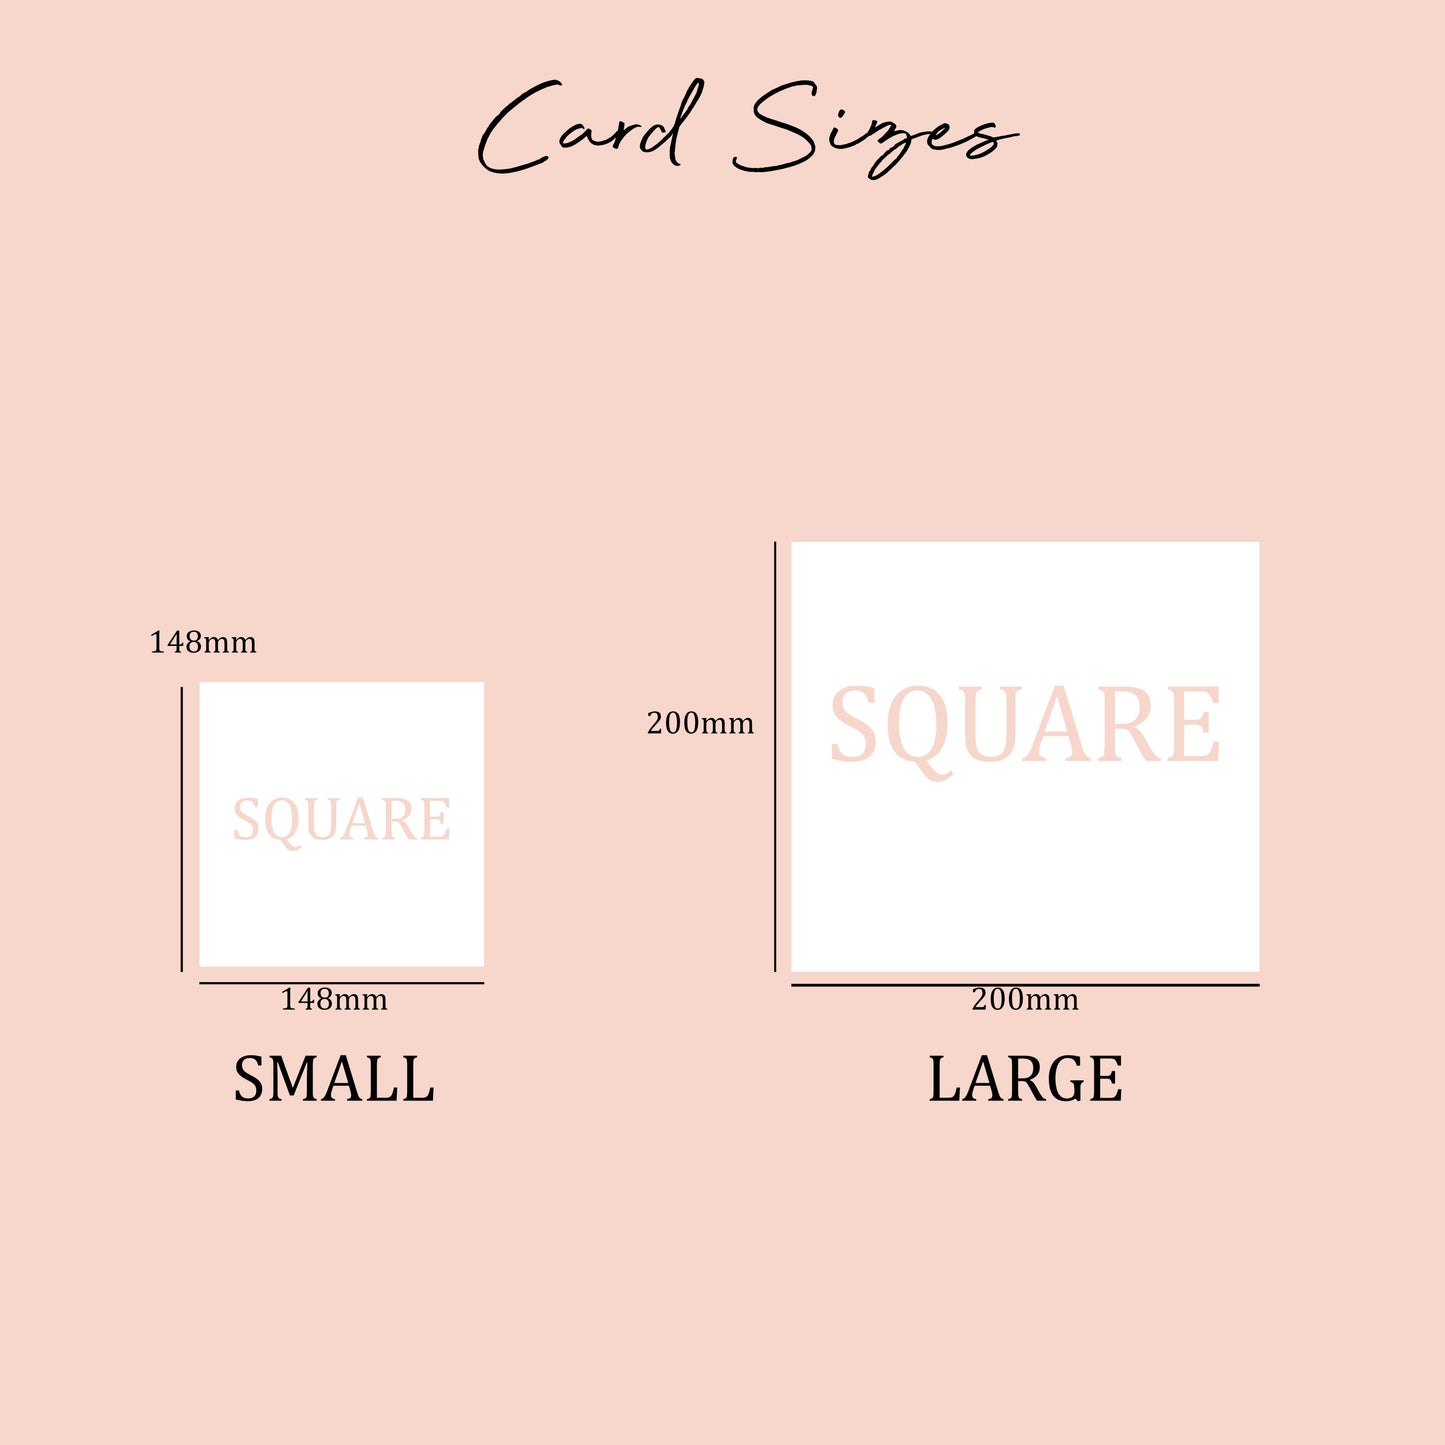 a card size comparison of a square and a smaller square